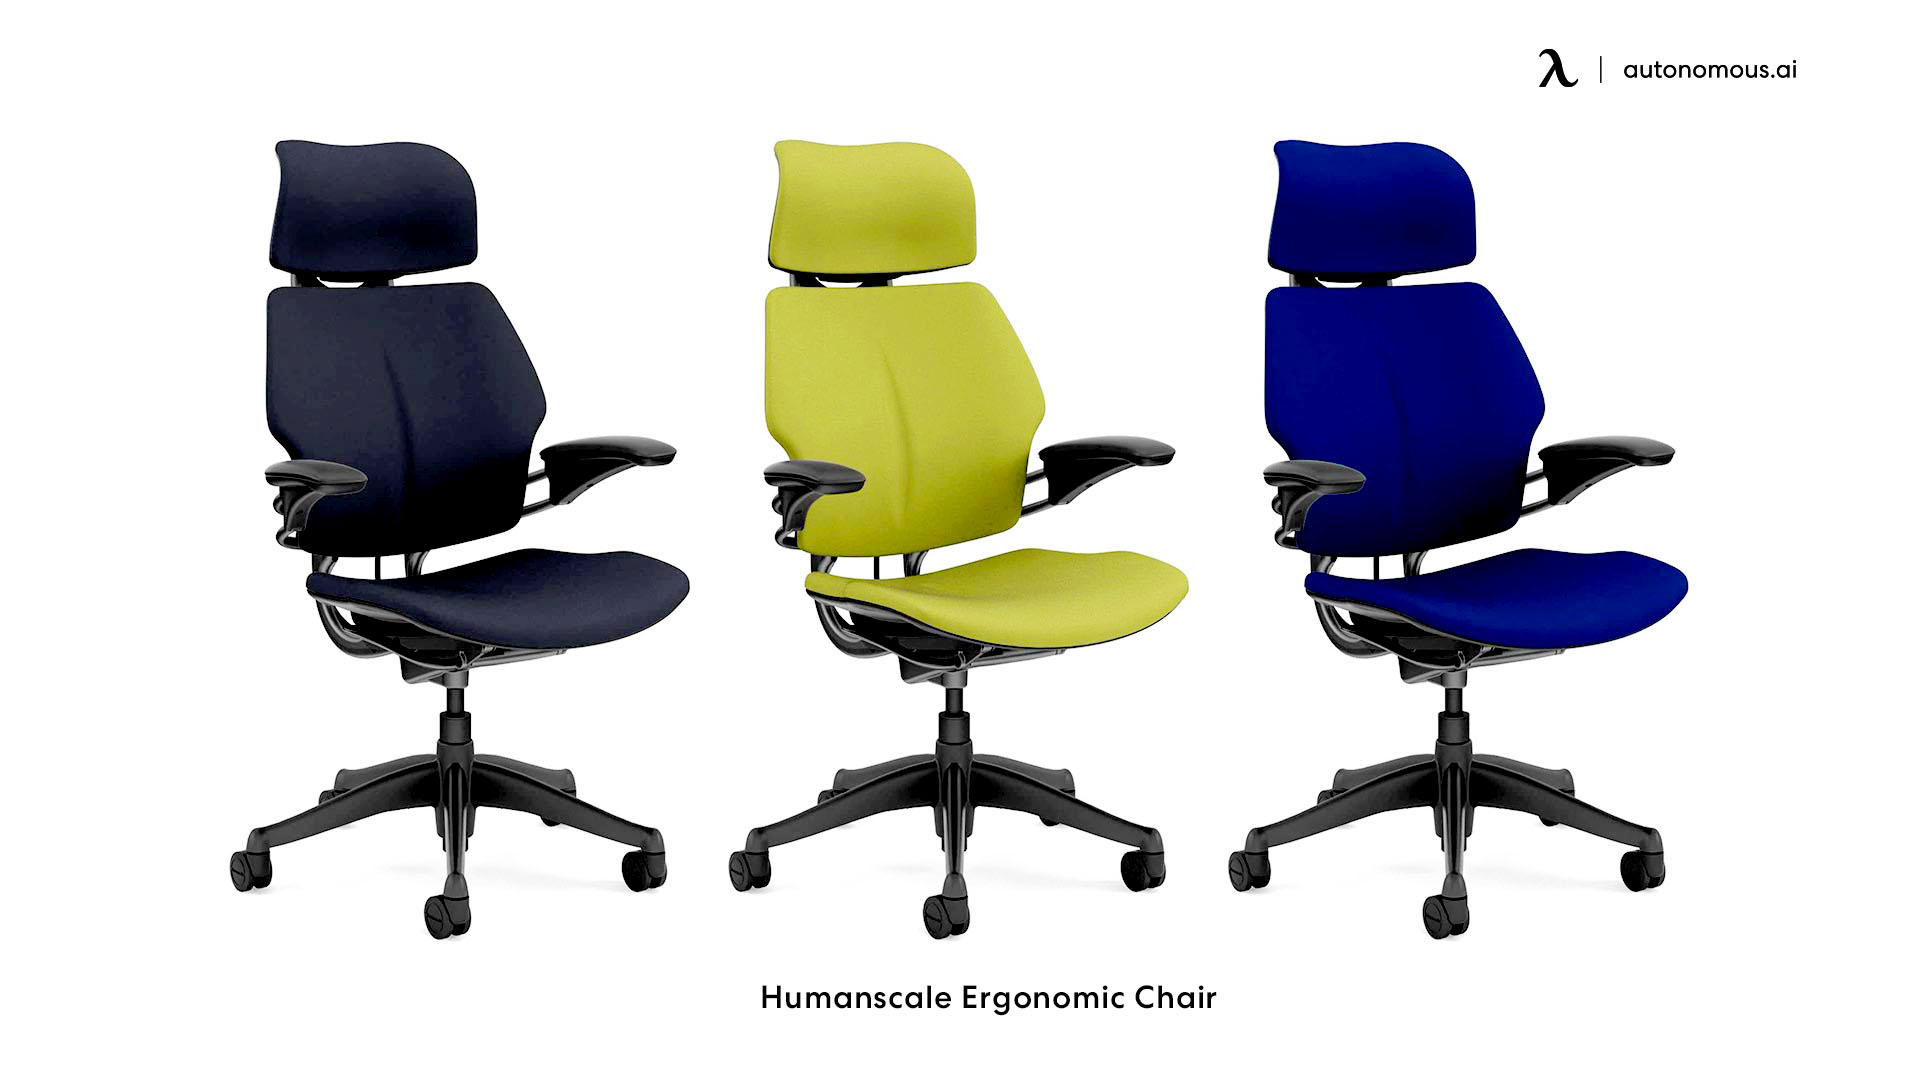 Humanscale Ergonomic Chair